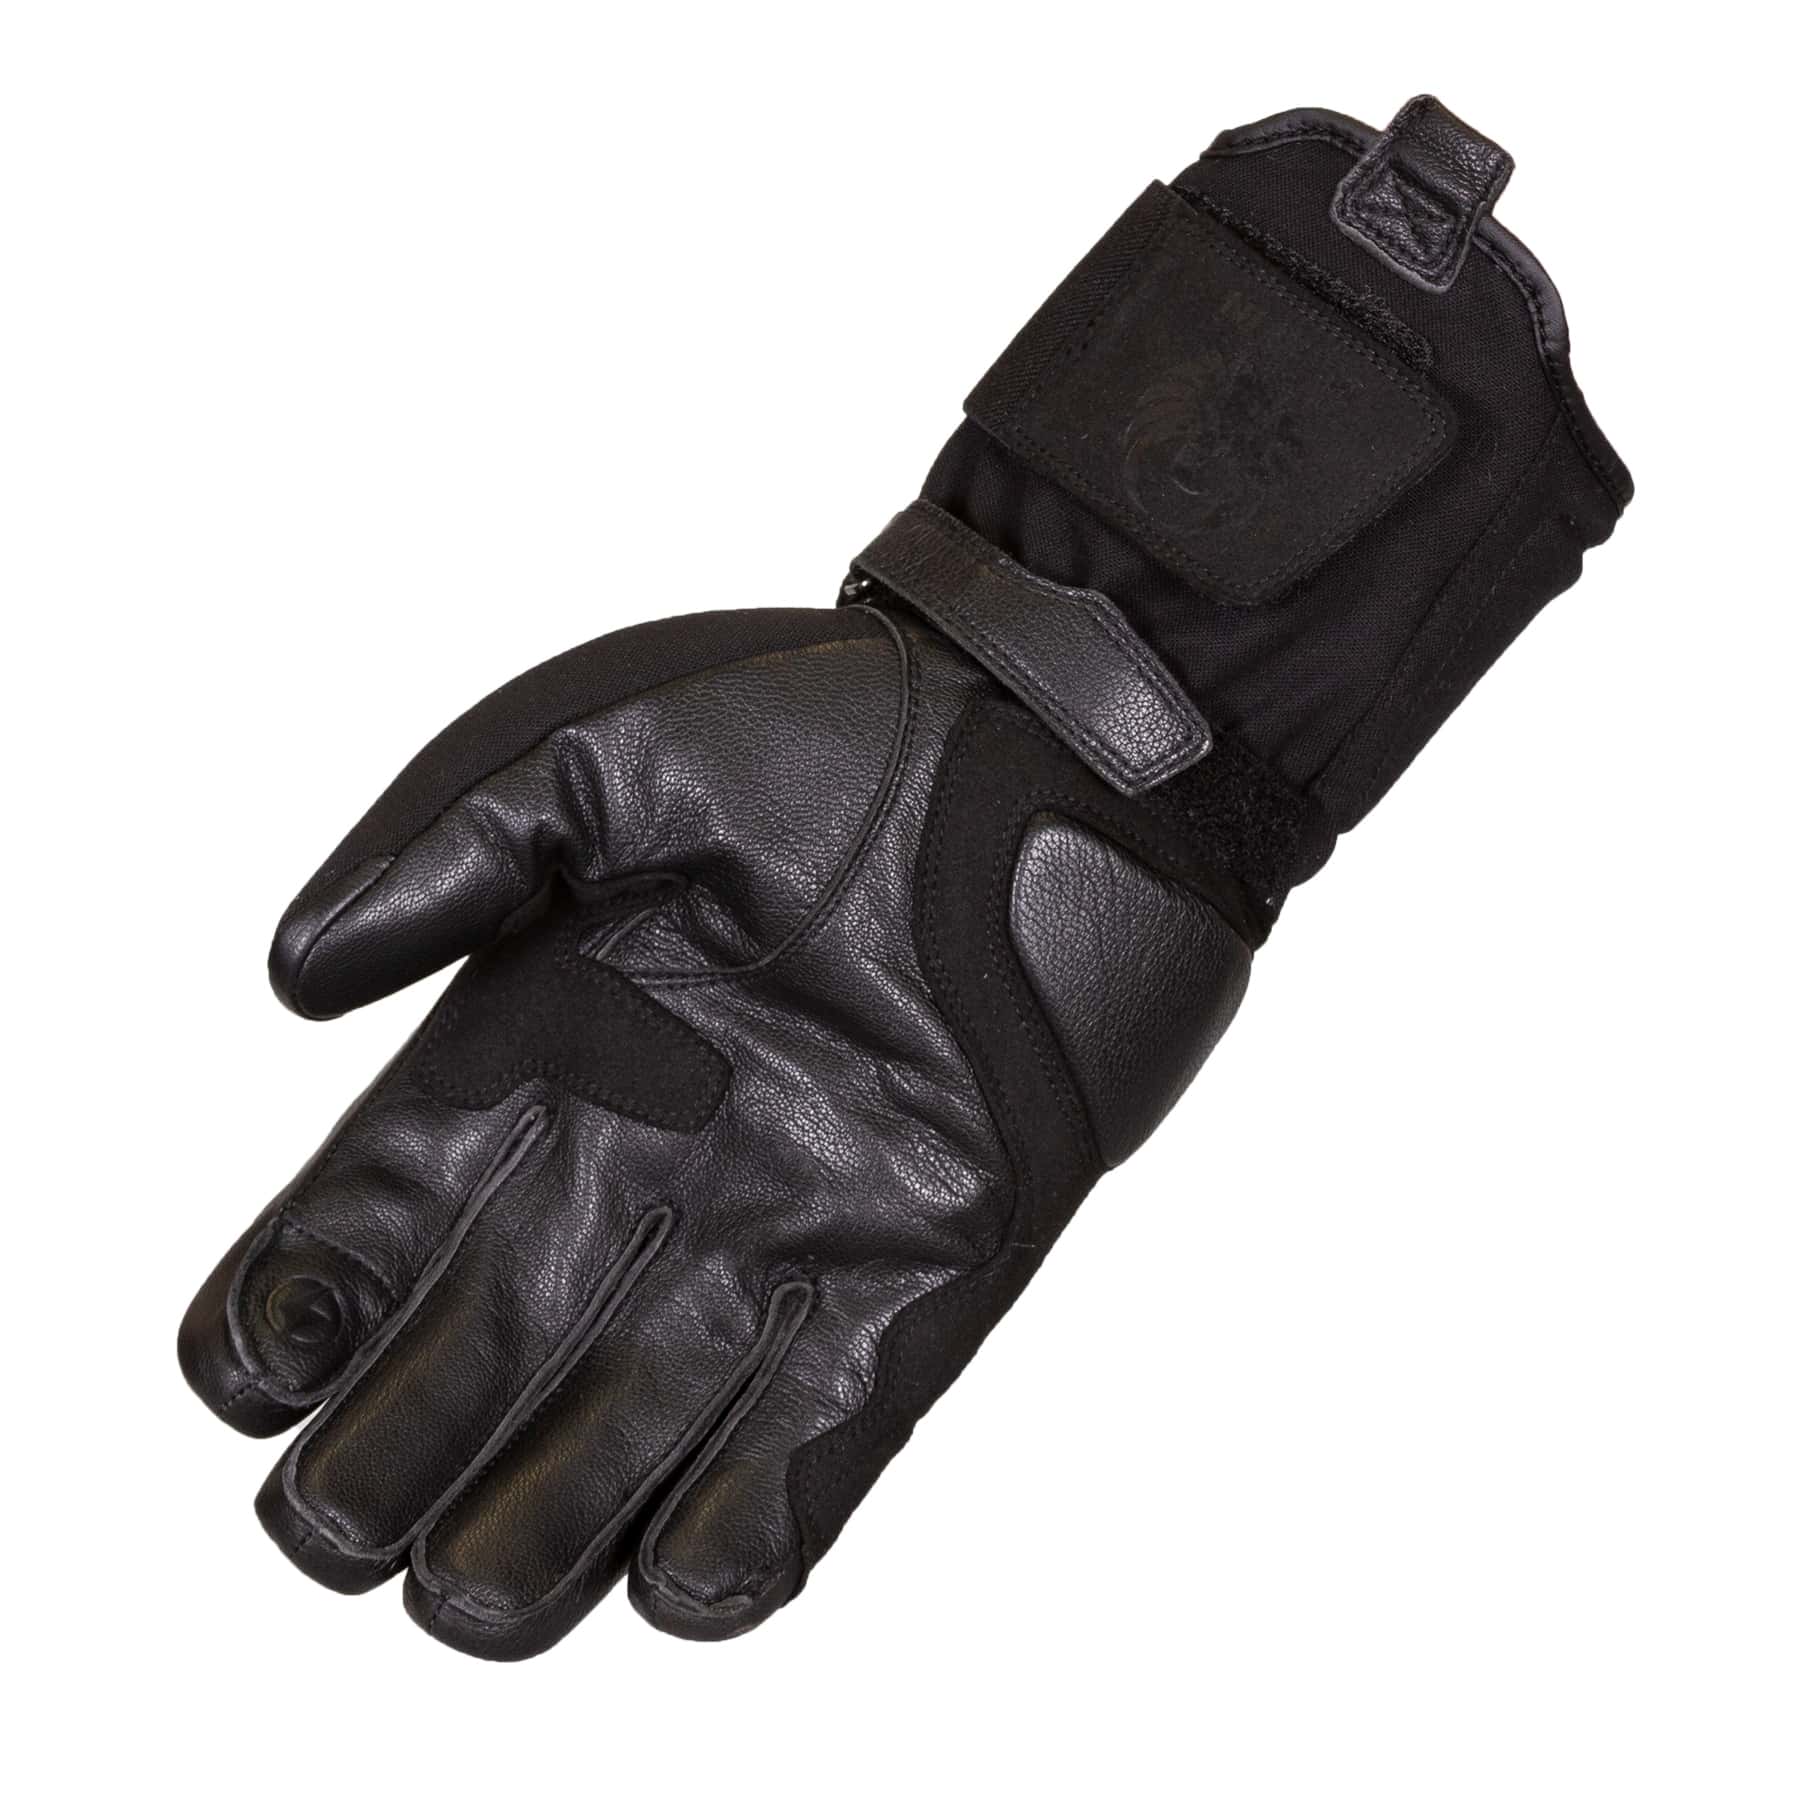 Studio image of the Merlin Longdon Heated Glove in black